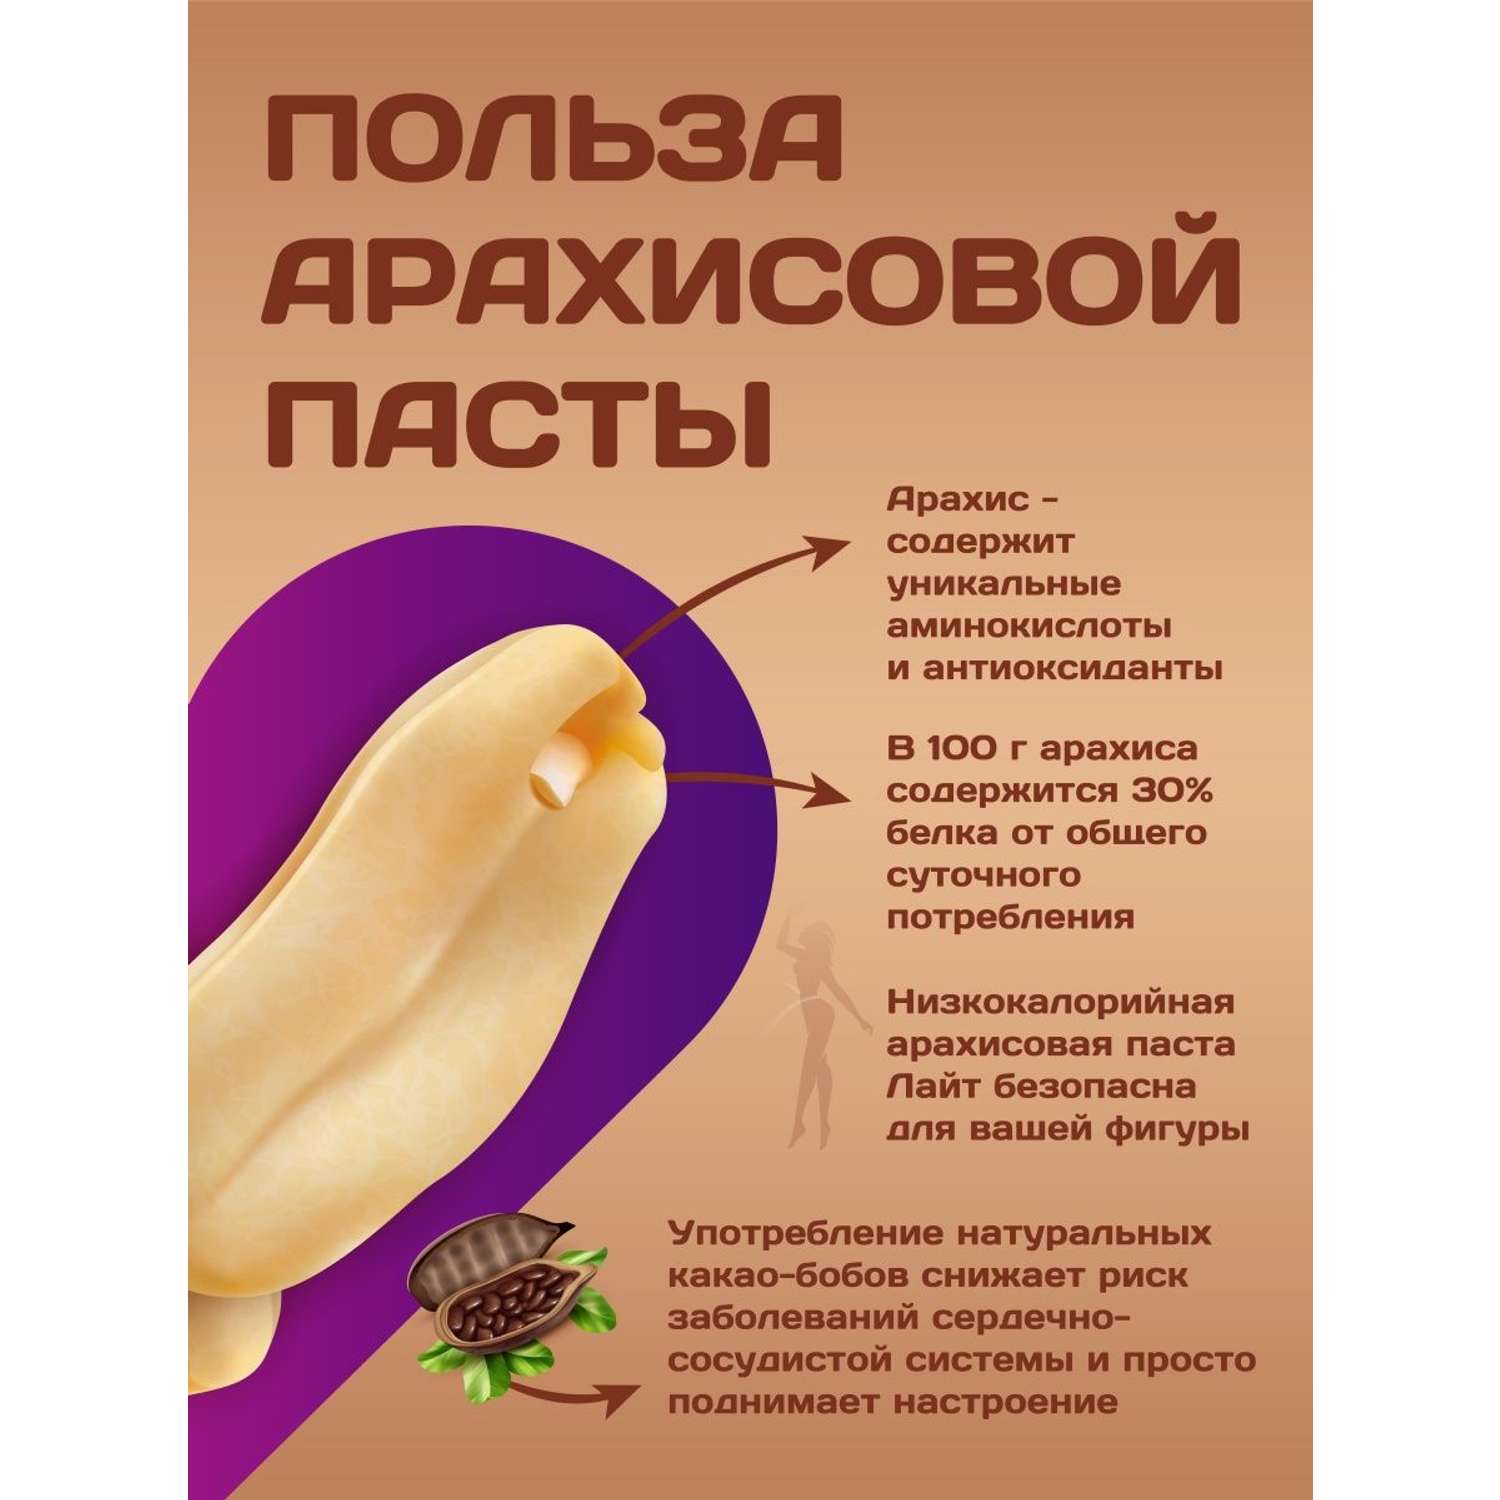 Арахисовая паста Намажь орех без сахара низкокалорийная Шоко 450 грамм - фото 4